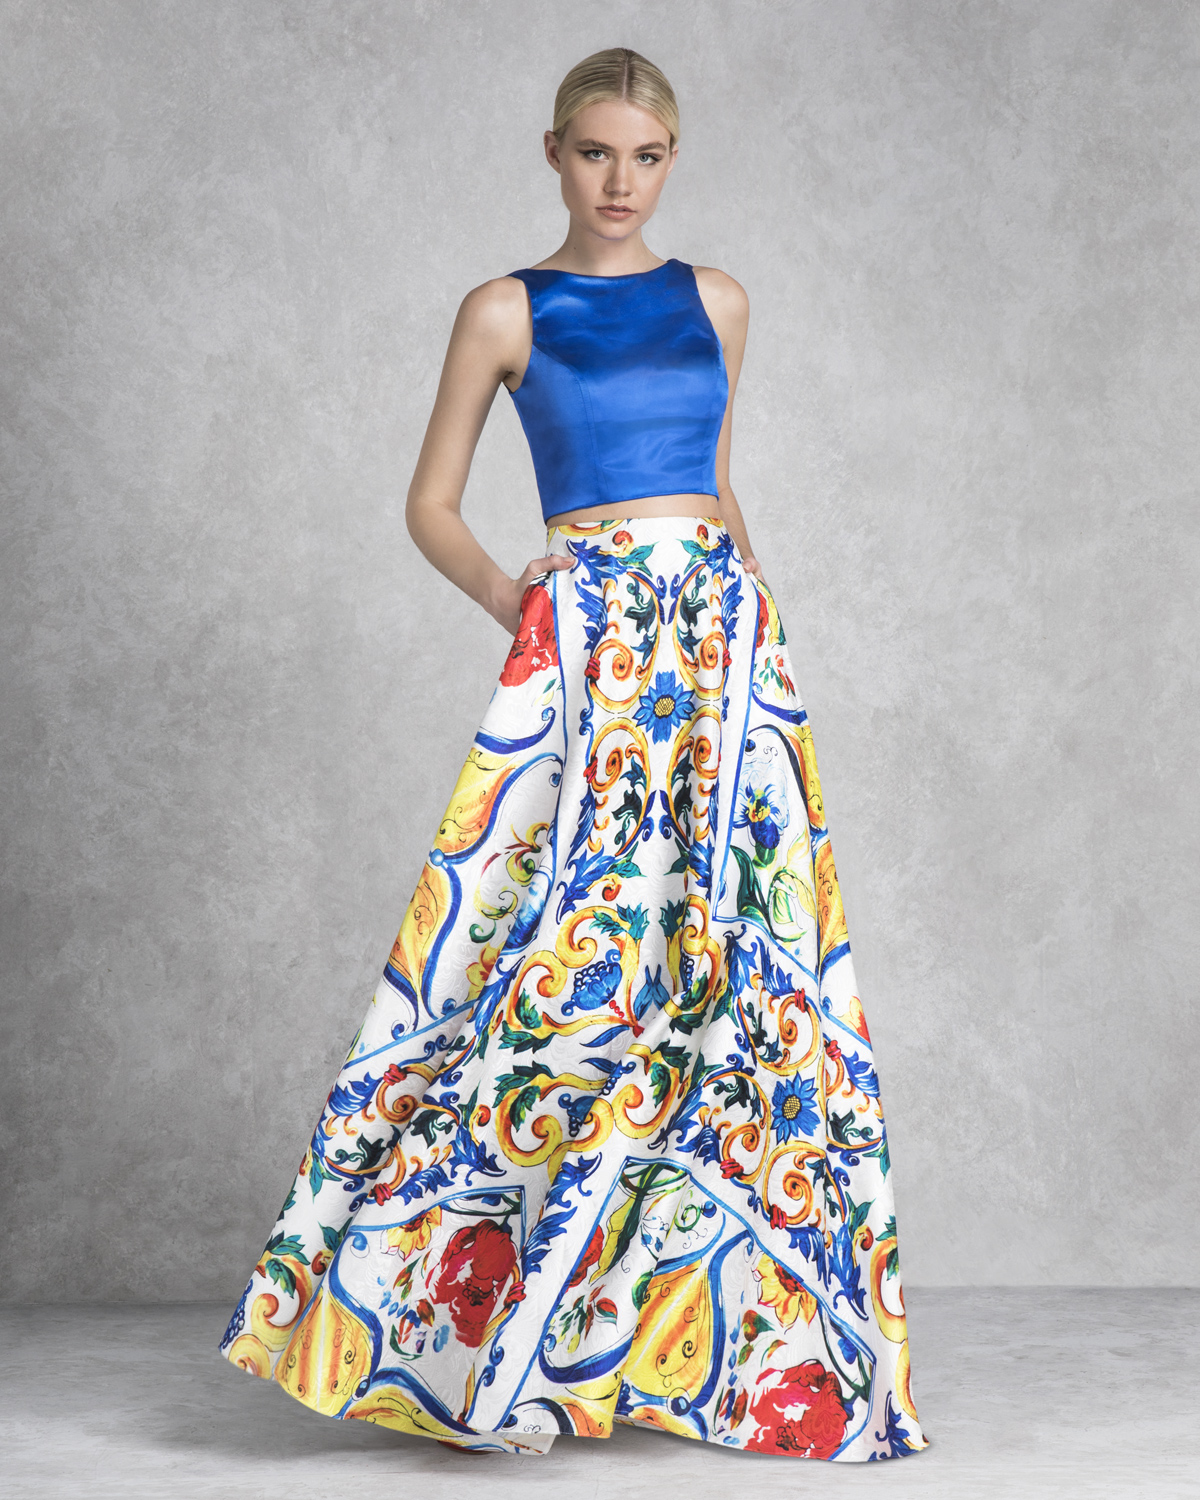 Коктейльные платья / Crop top with printed skirt and solid color top